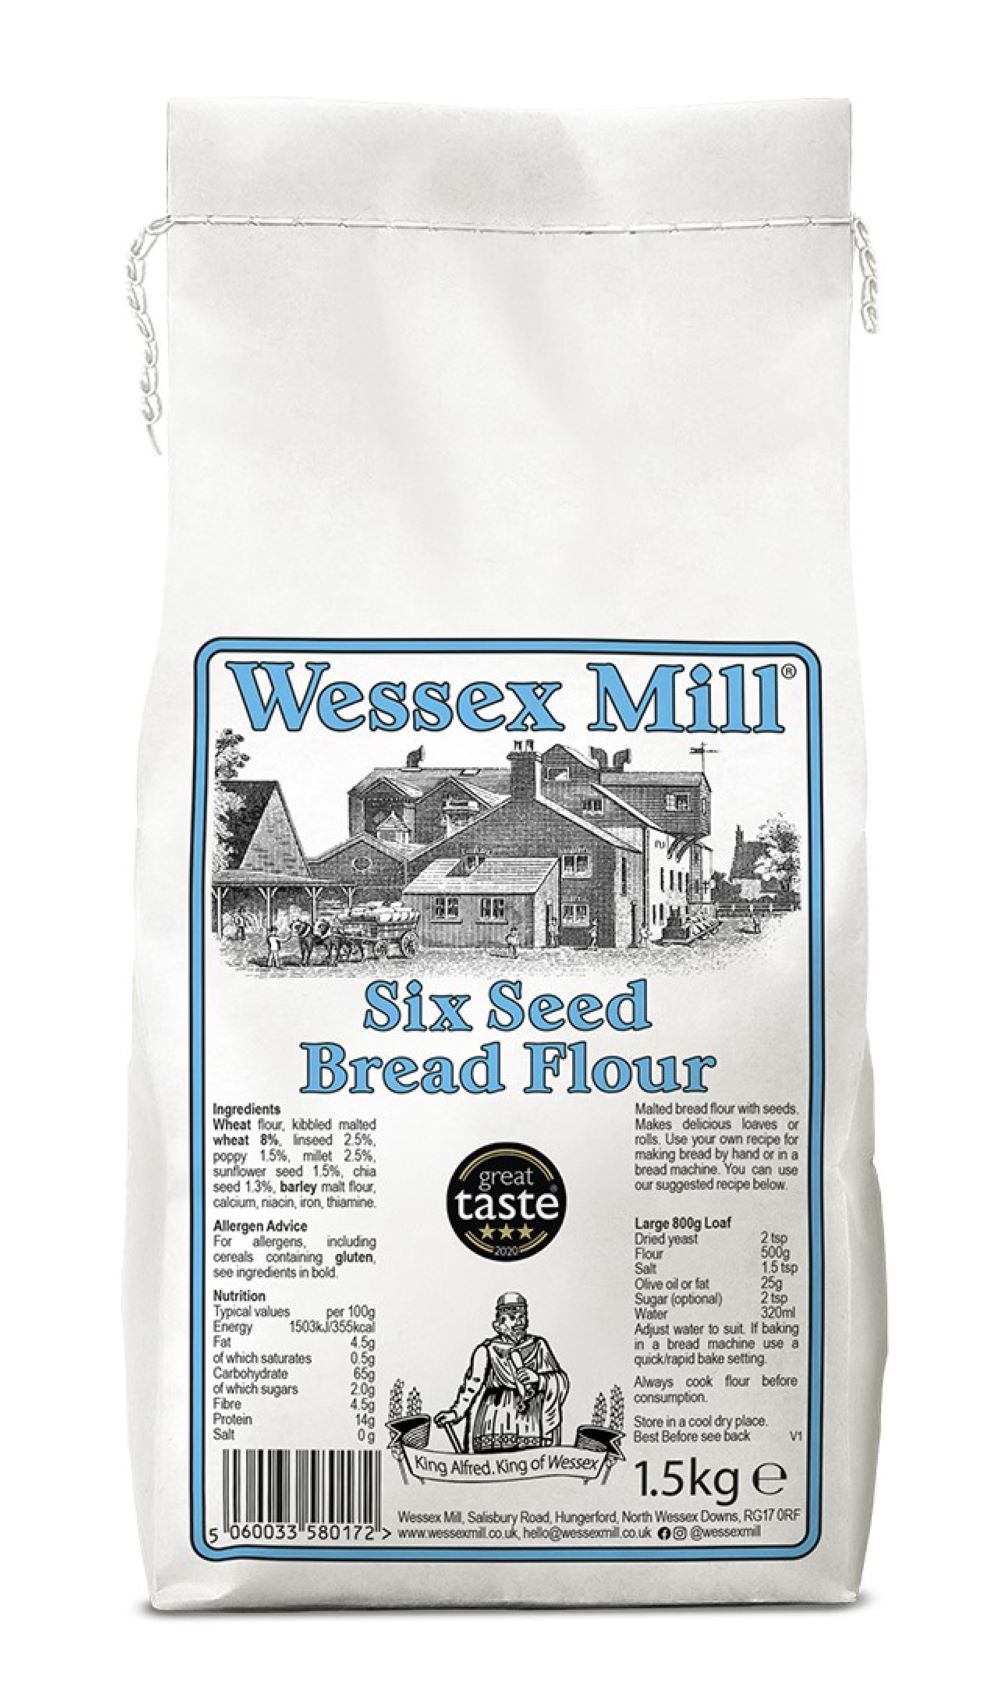 Six Seed Bread Flour